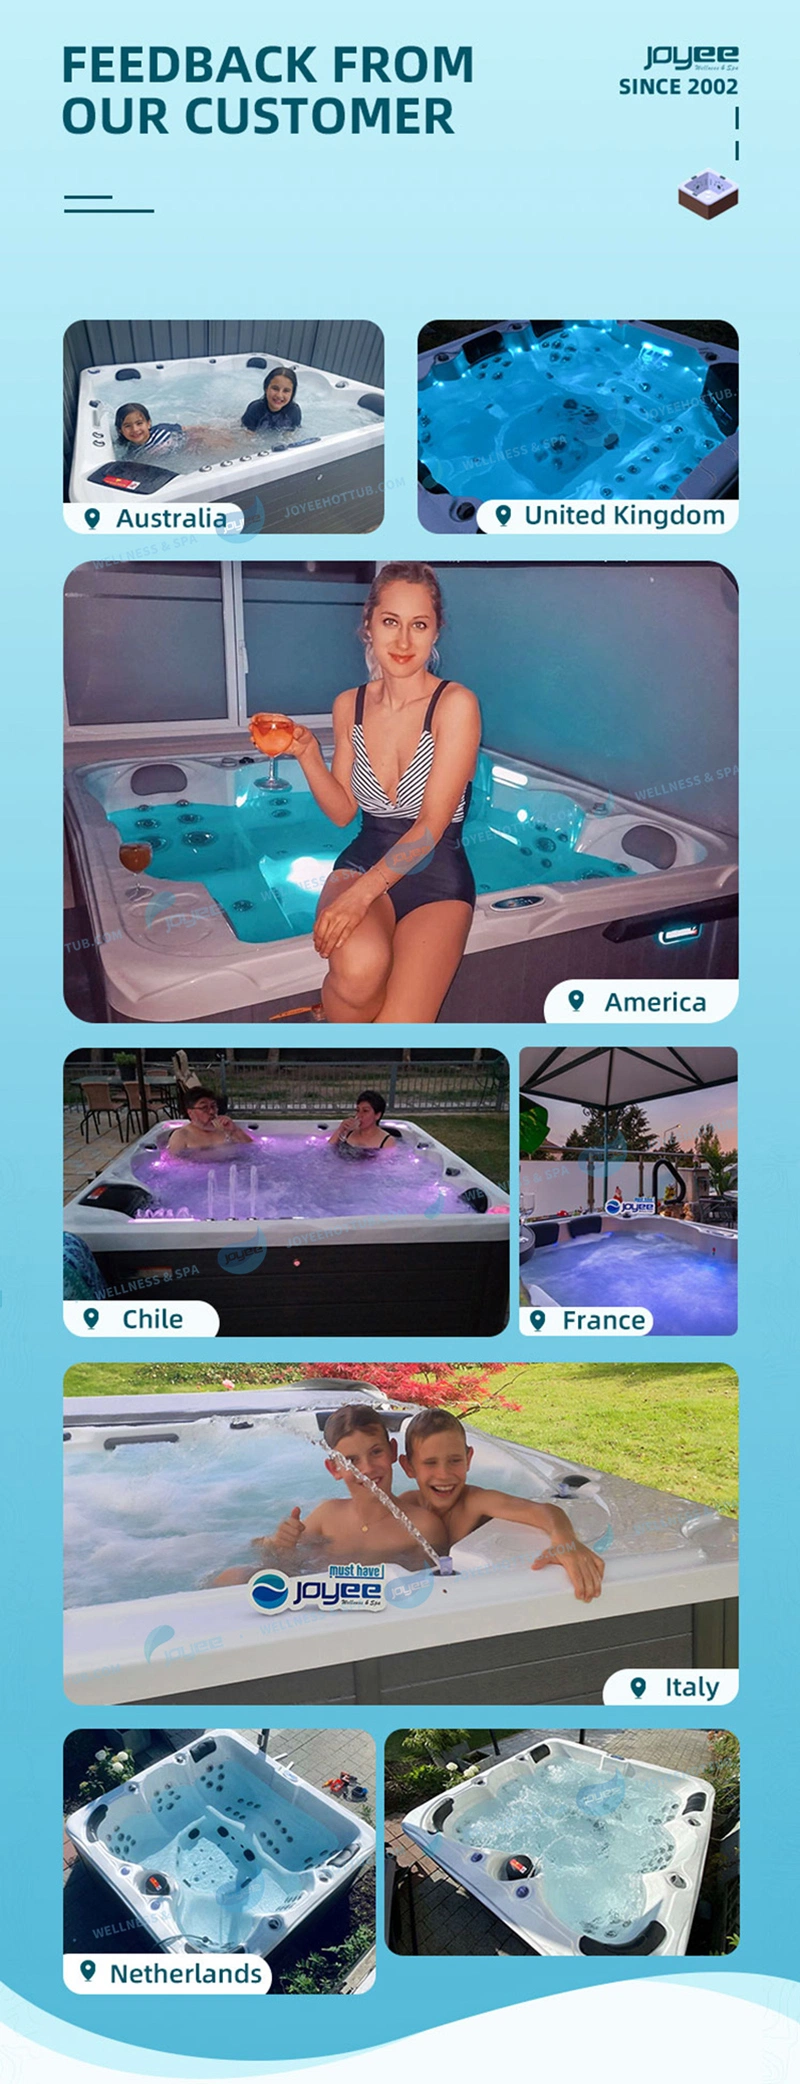 Joyee Imported Acrylic Balboa Garden SPA 5 Person Jet Whirlpool Bath Outdoor Hot Tub